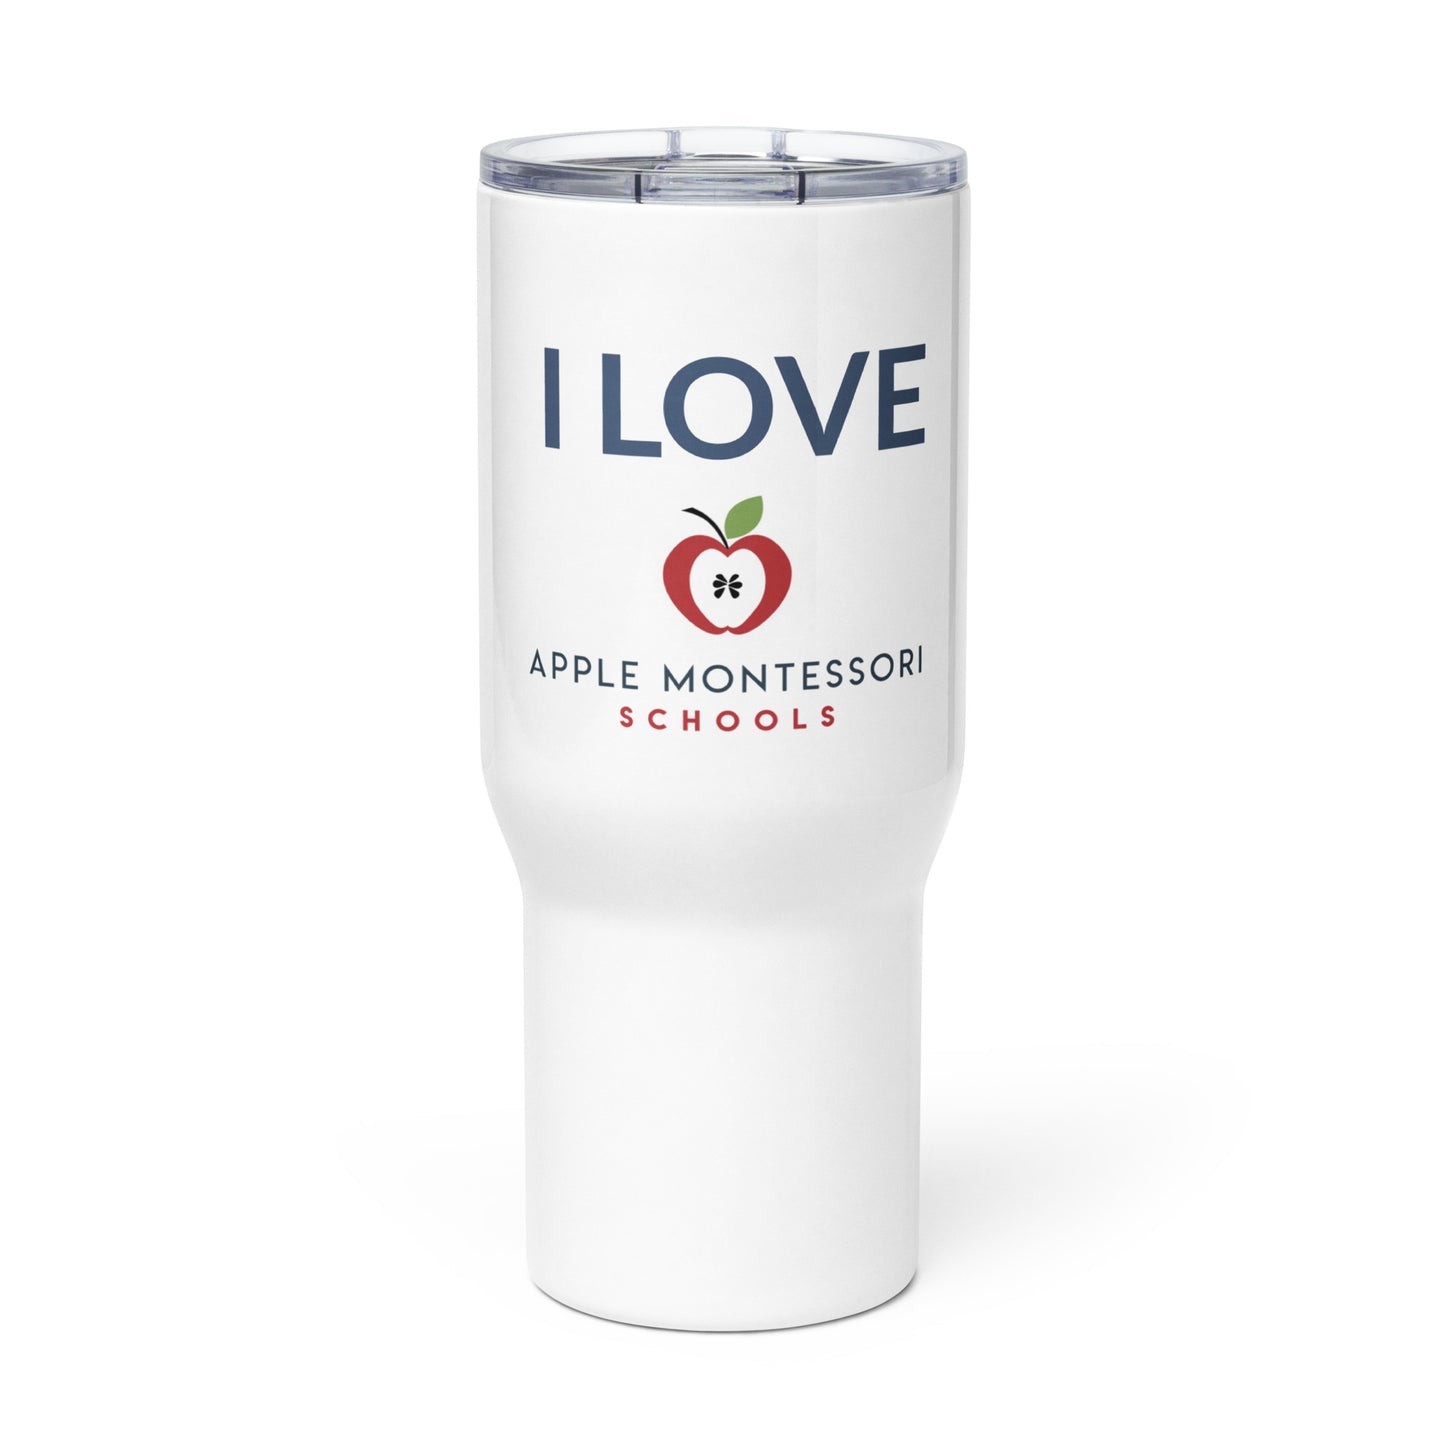 I Love Apple Montessori Schools Travel mug with a handle